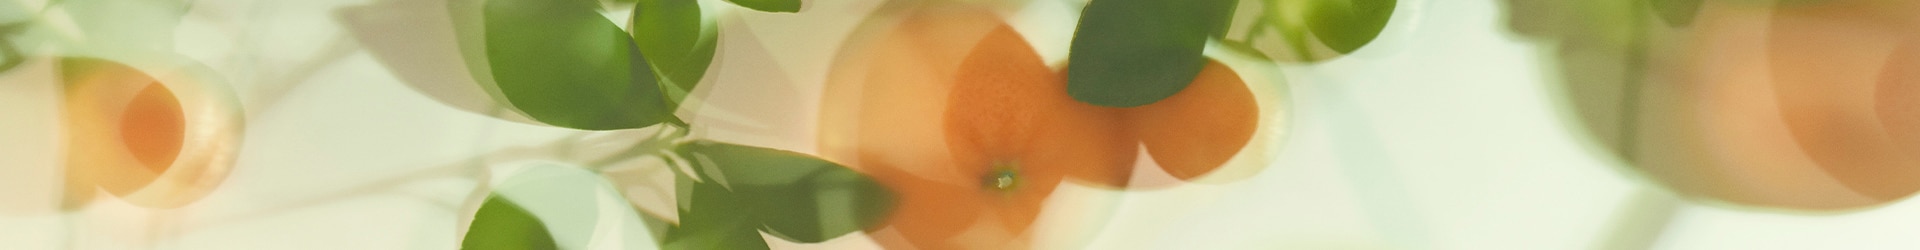 image of mandarins, an ingredient in Jo Malone London lime basil and mandarin, growing on a tree